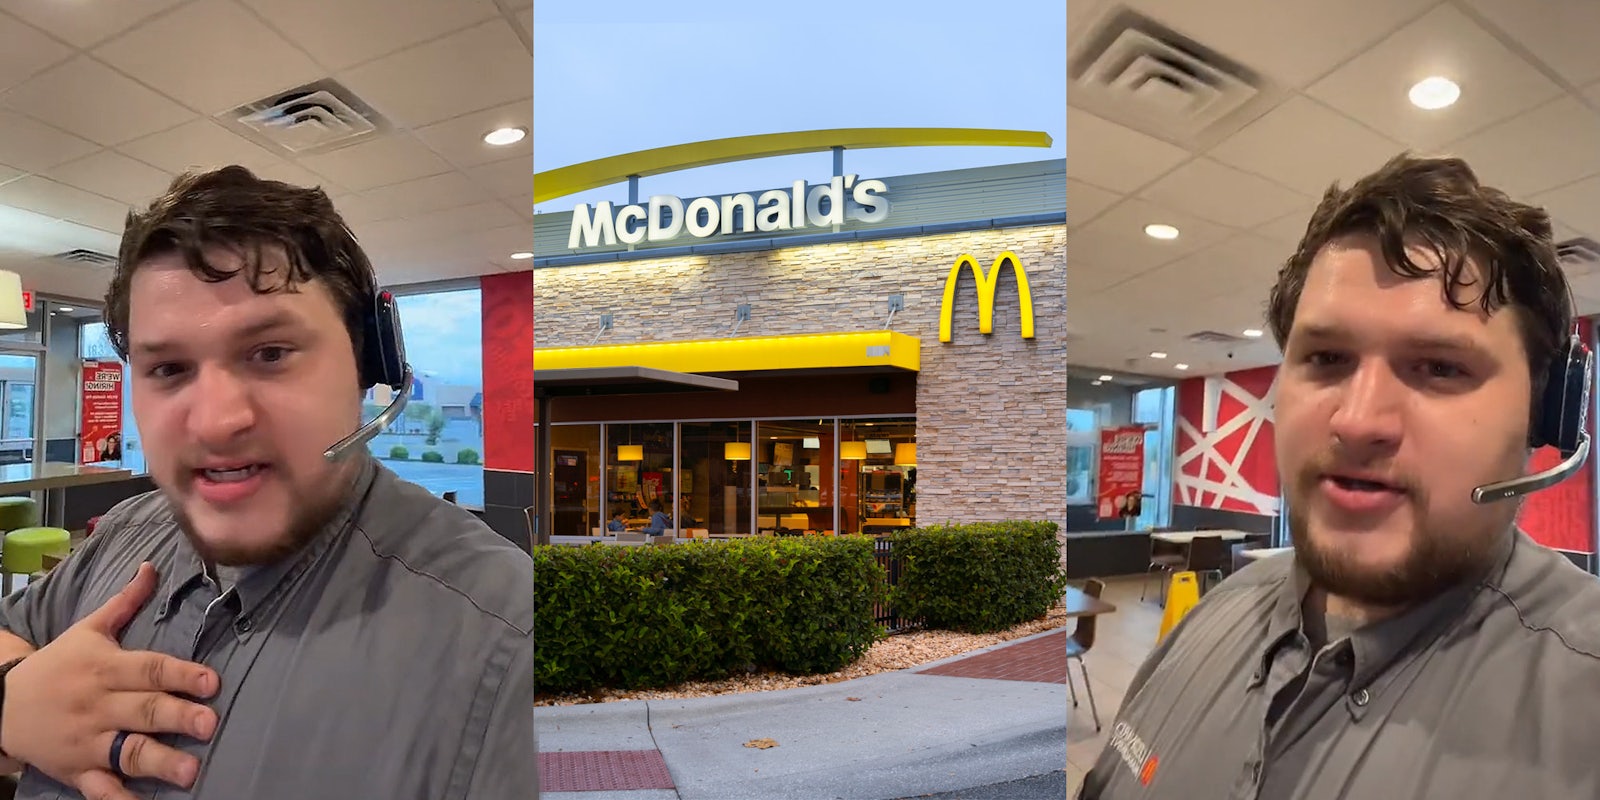 McDonalds worker hand on chest speaking (l) McDonalds building with sign (c) McDonalds worker speaking (r)